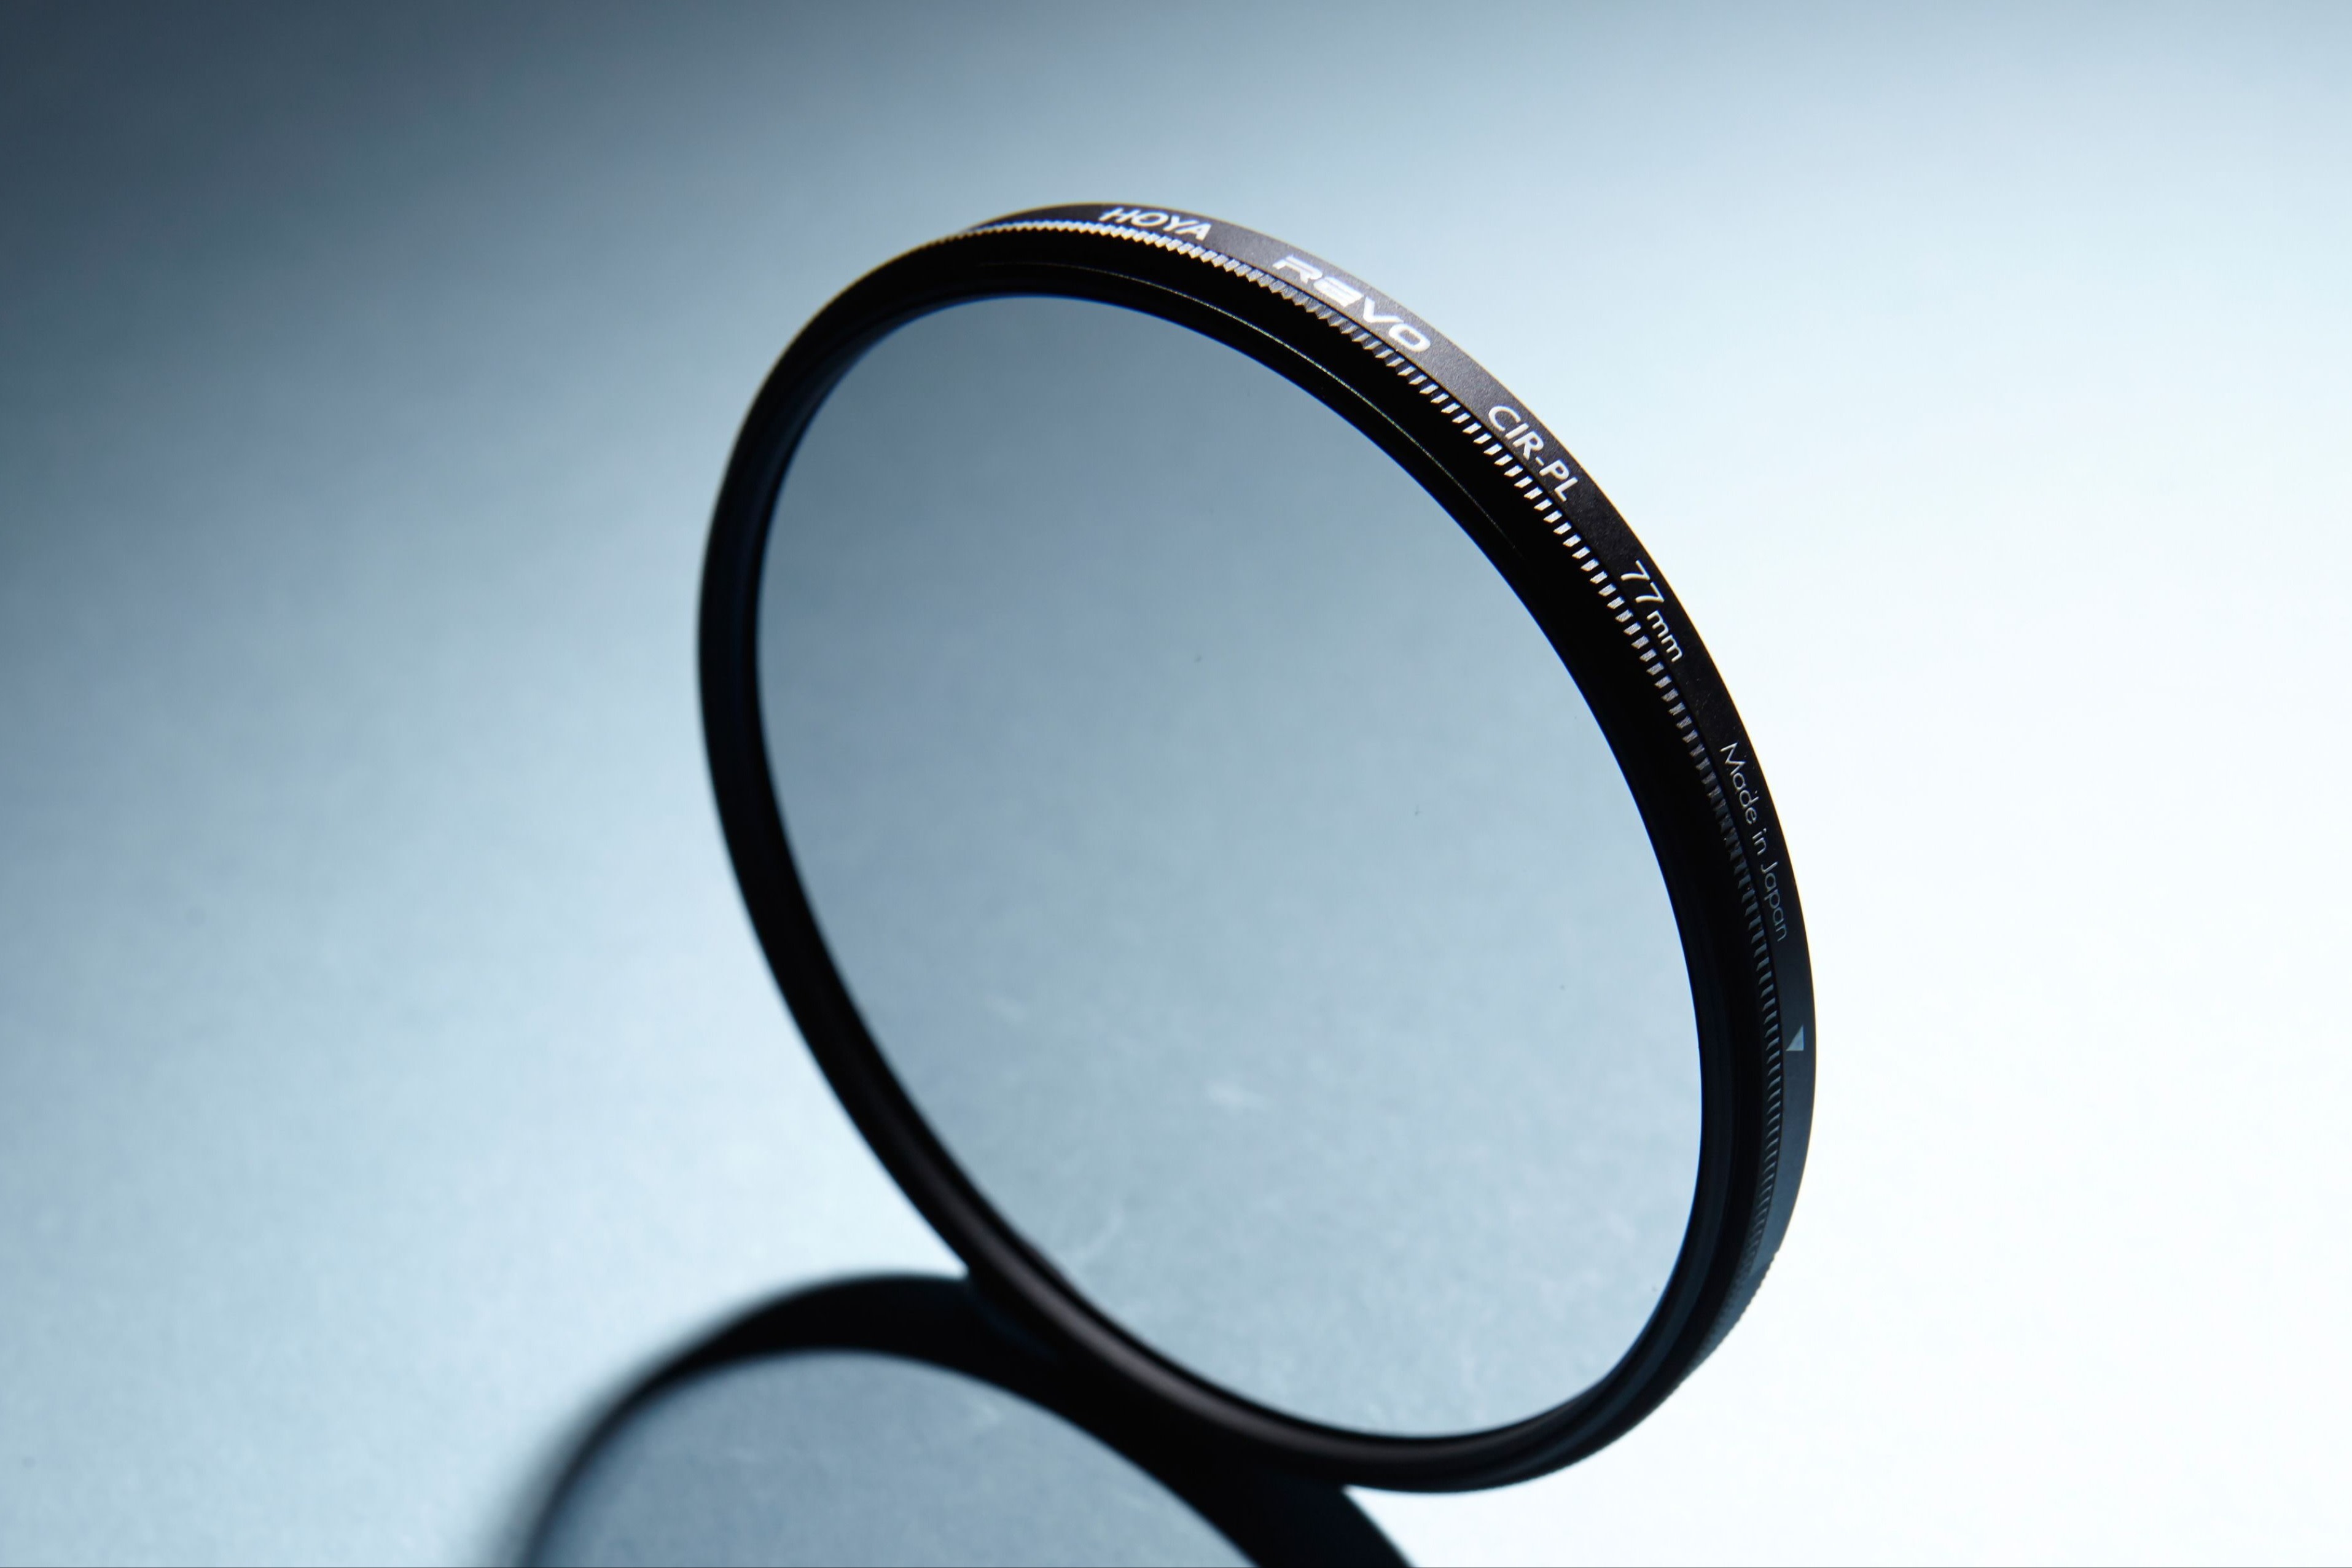 A Hoya lens 